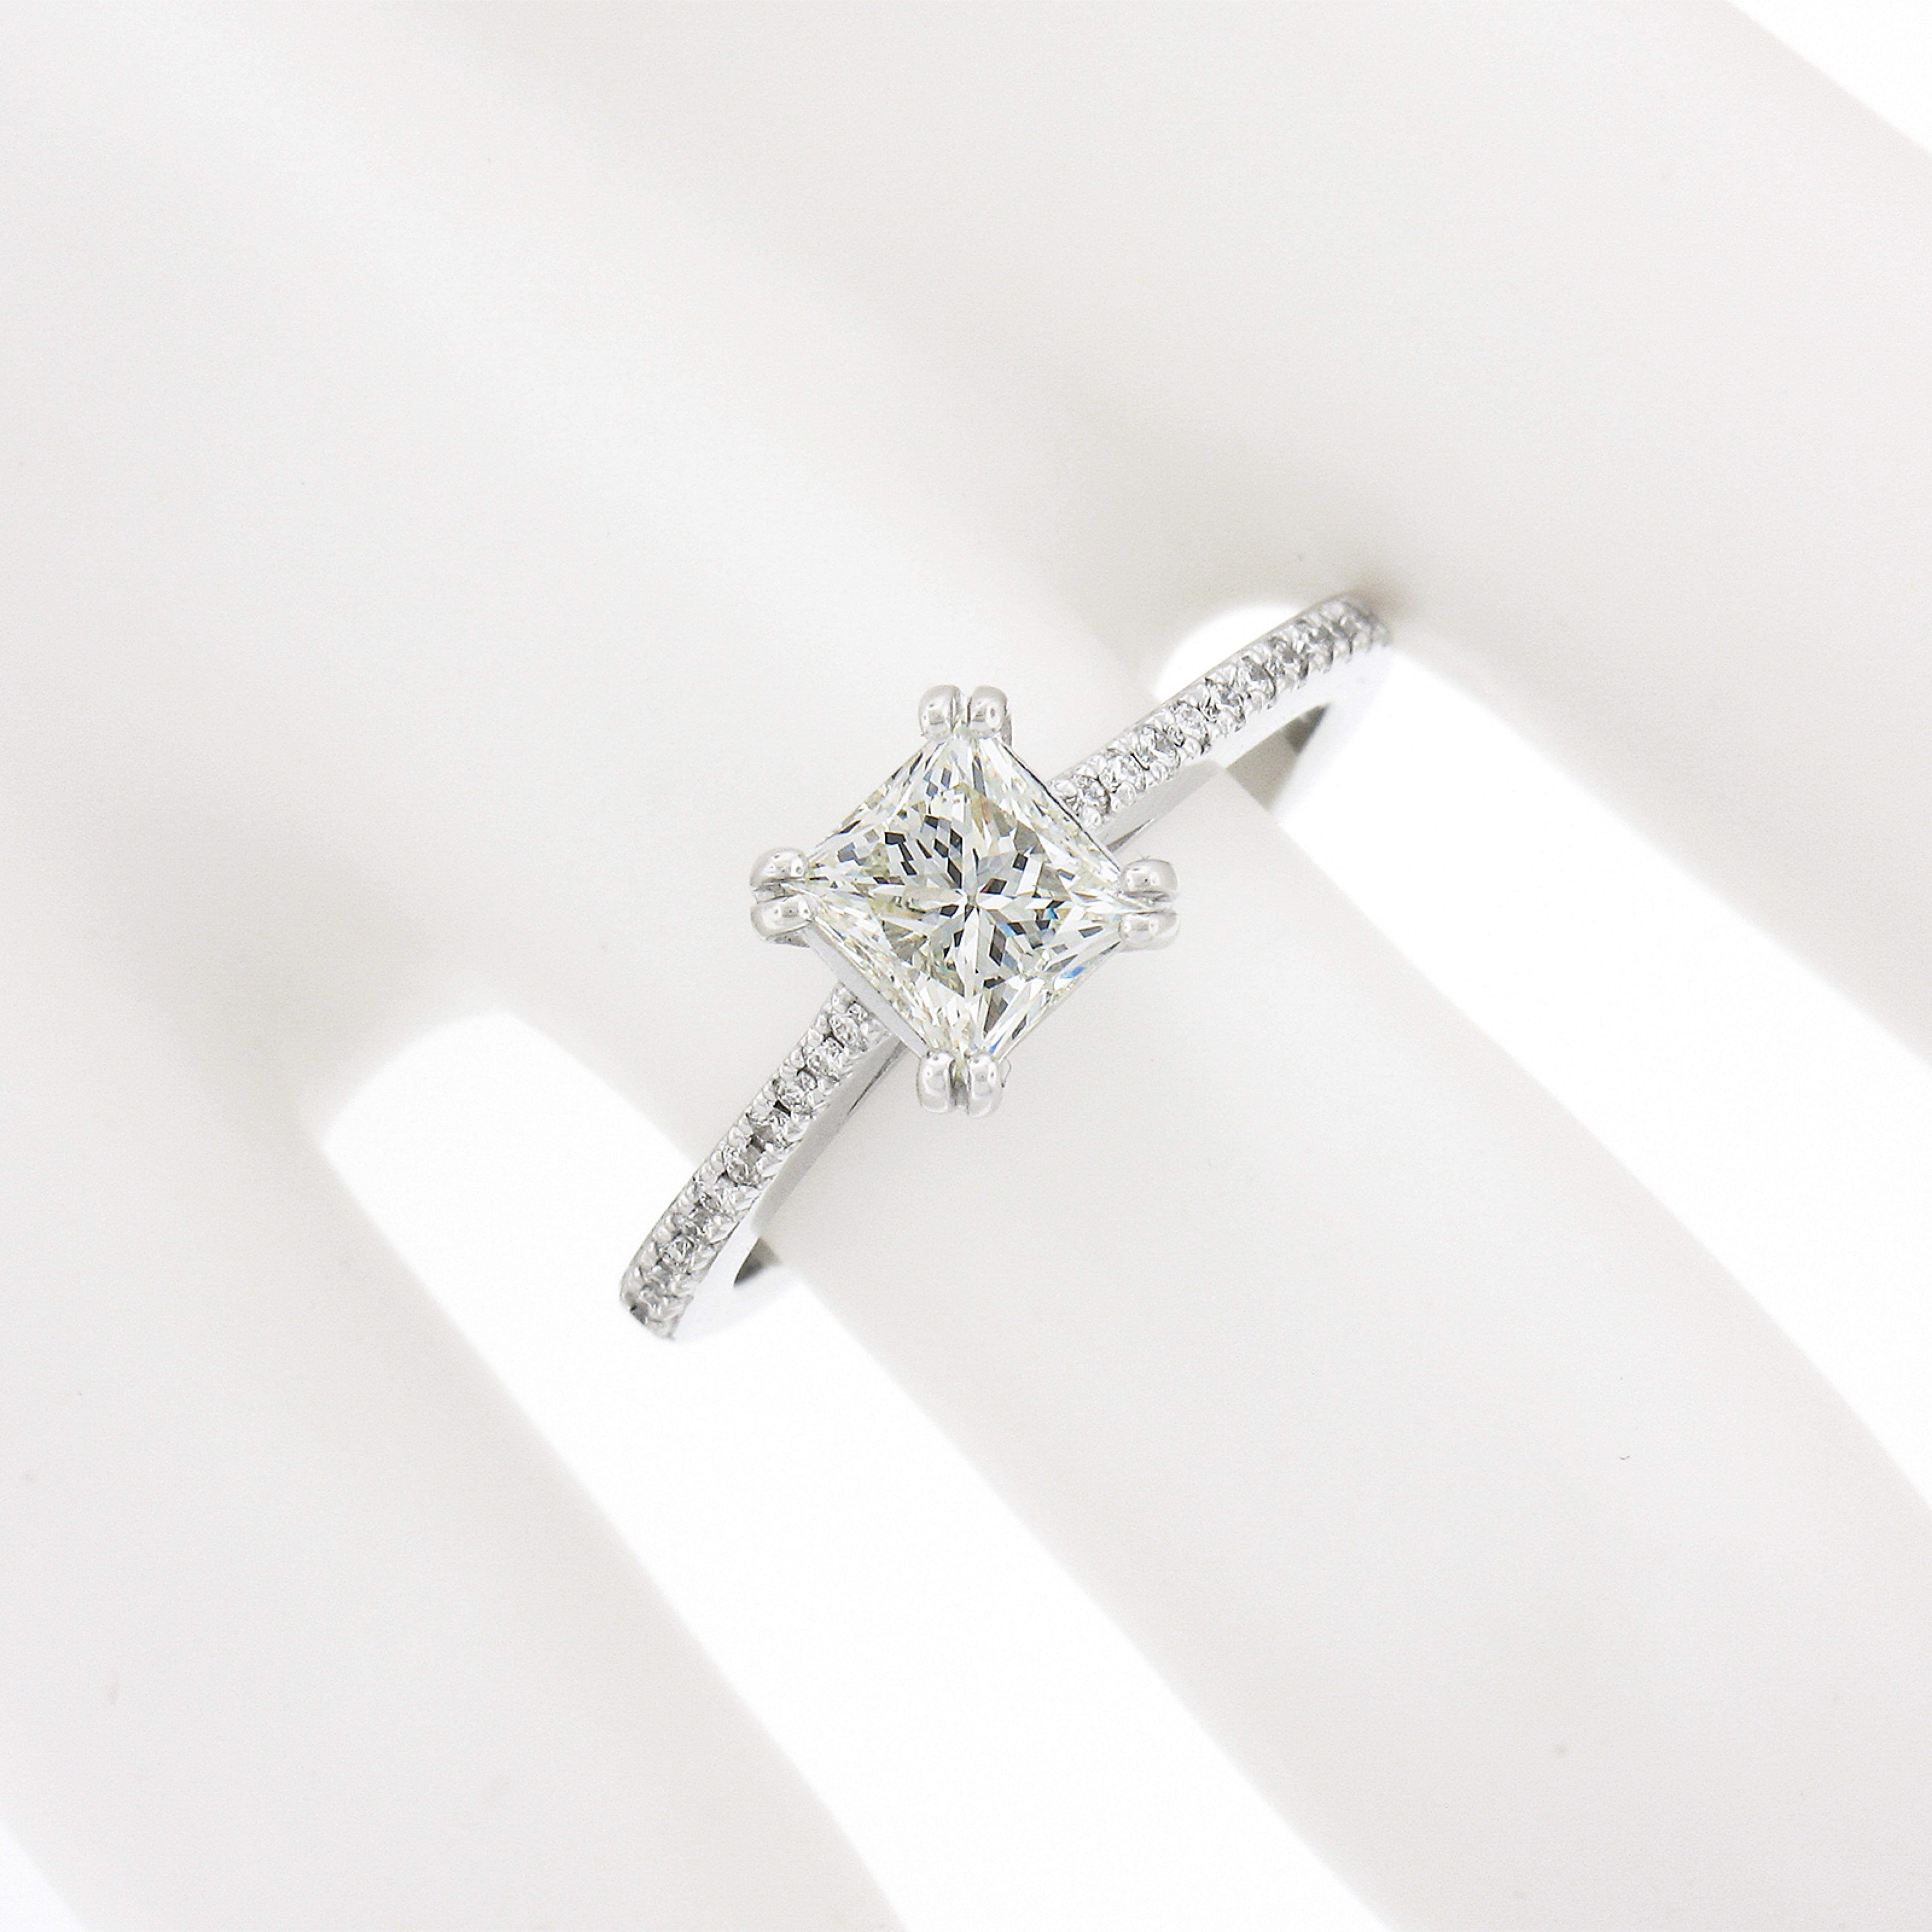 NEW 14k White Gold 1.12ctw GIA Princess Cut Diamond Solitaire Engagement Ring en vente 1